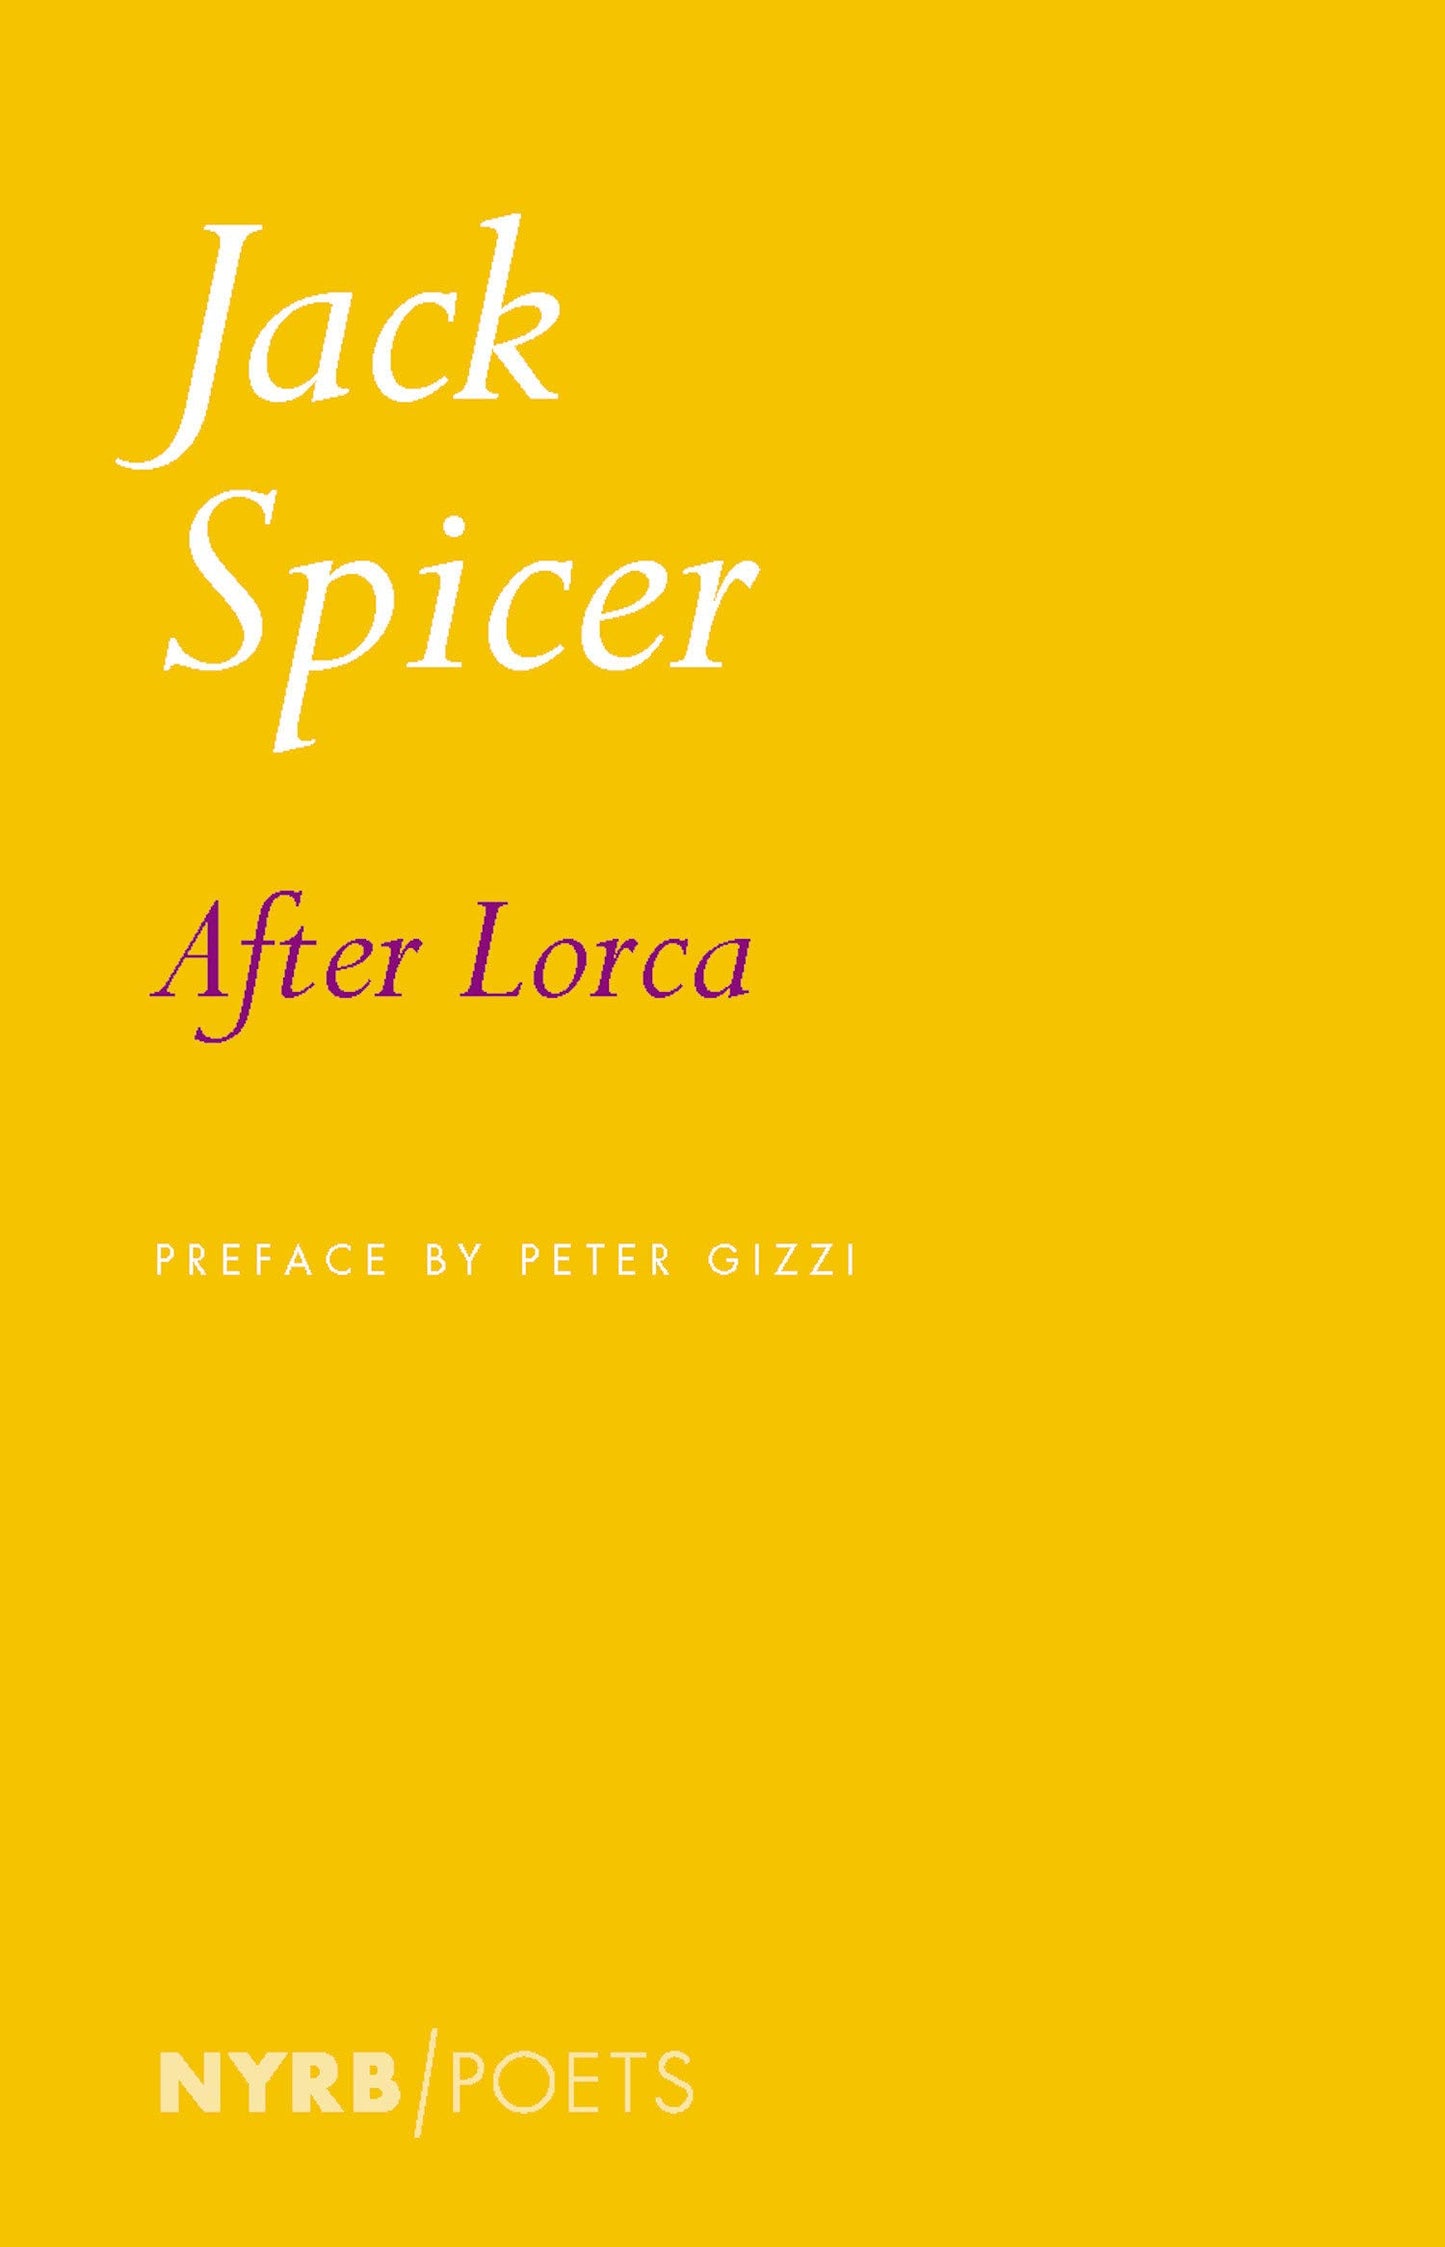 After Lorca, by Jack Spicer